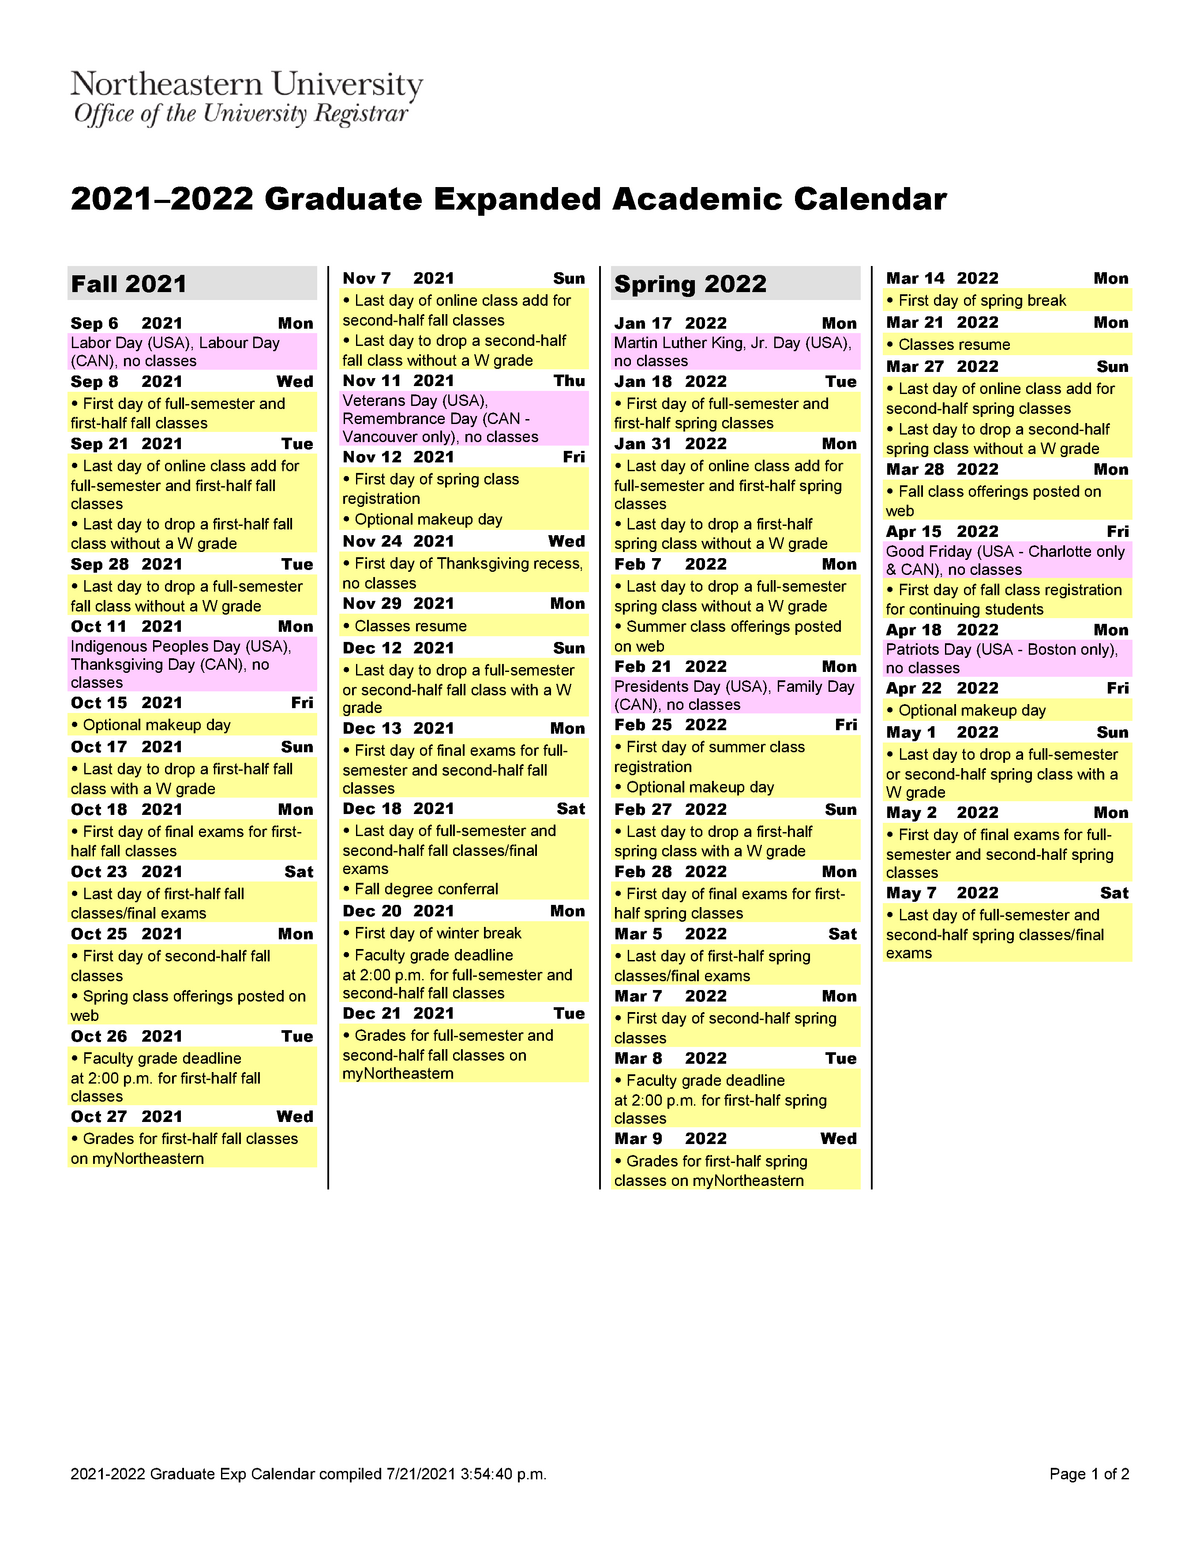 Emory Academic Calendar 2022 2021 2022 Gr Expanded Calendar List 3 - Info 6215 - Business Analysis -  Studocu